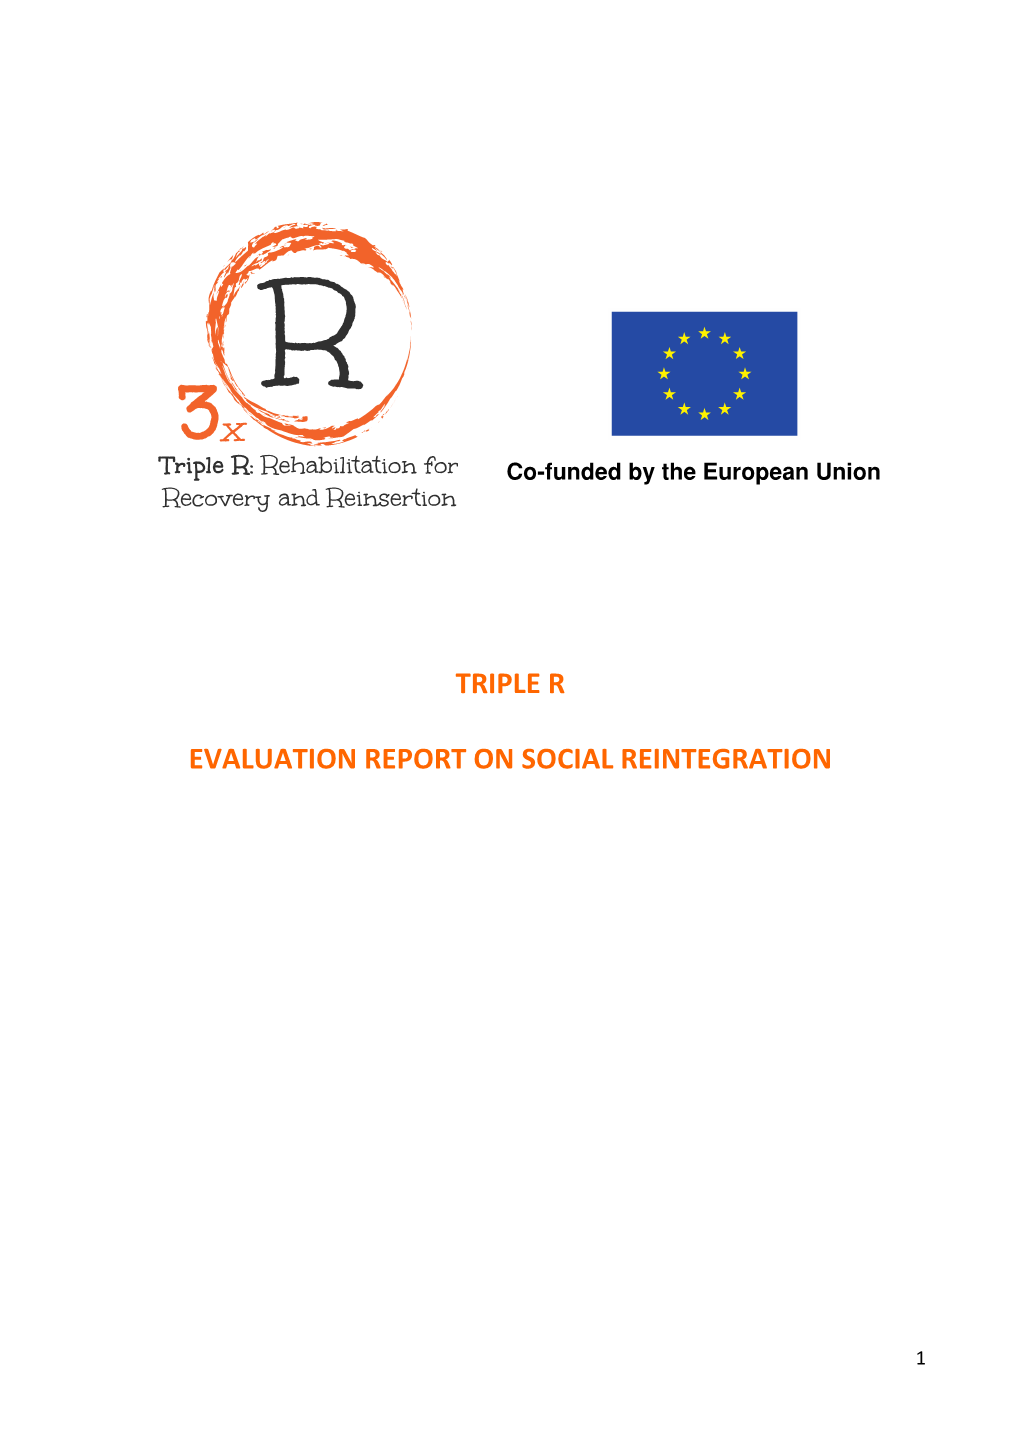 Evaluation Report on Social Reintegration